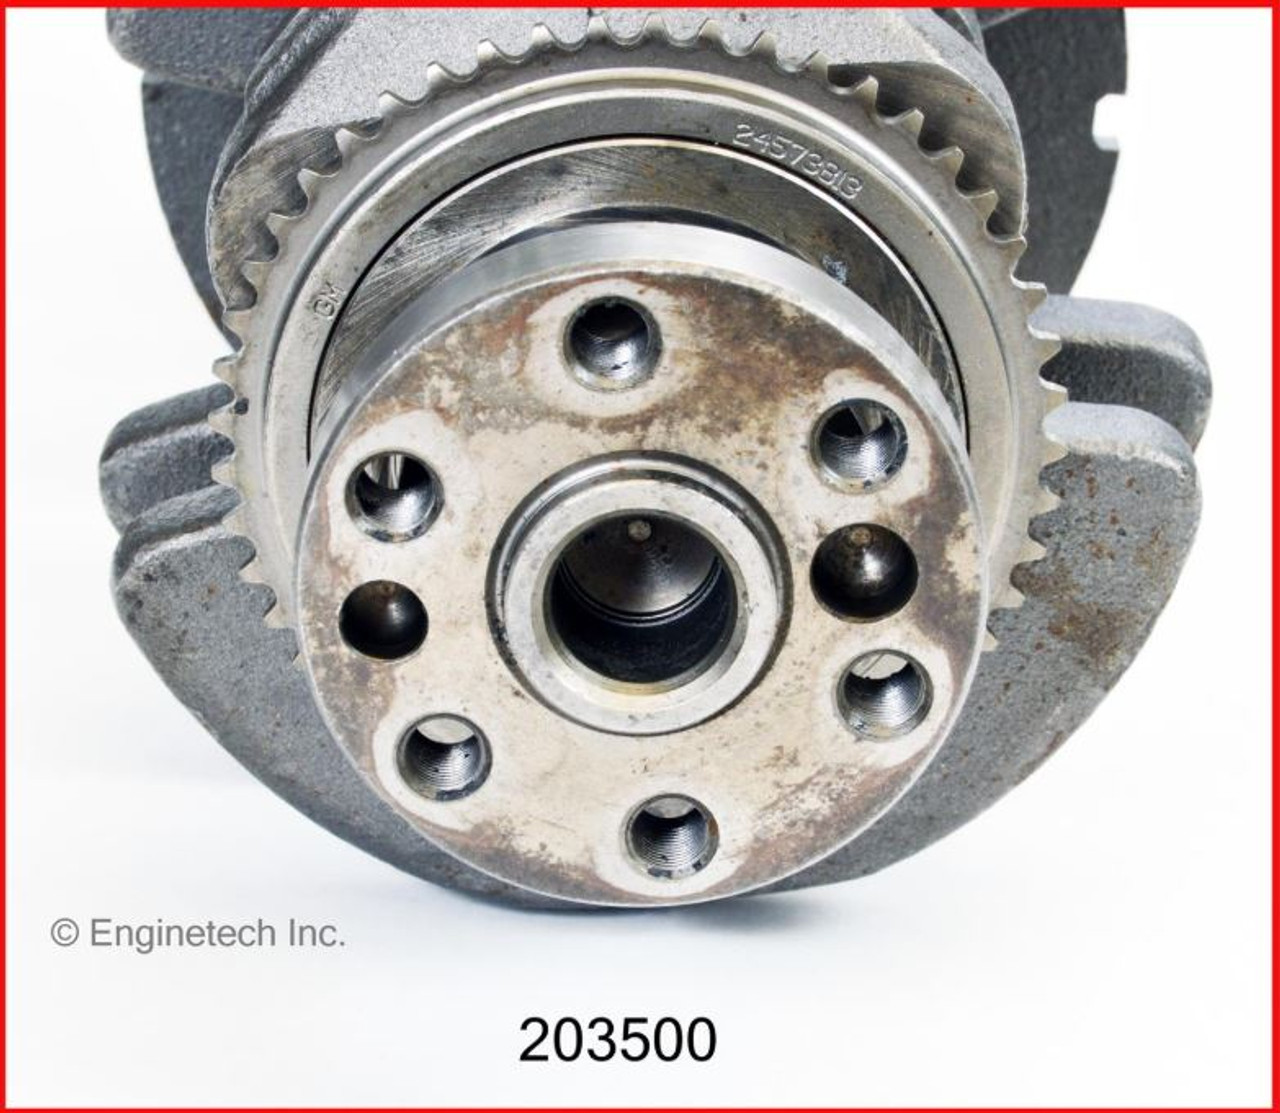 Crankshaft Kit - 1998 Pontiac Sunfire 2.4L (203500.B17)